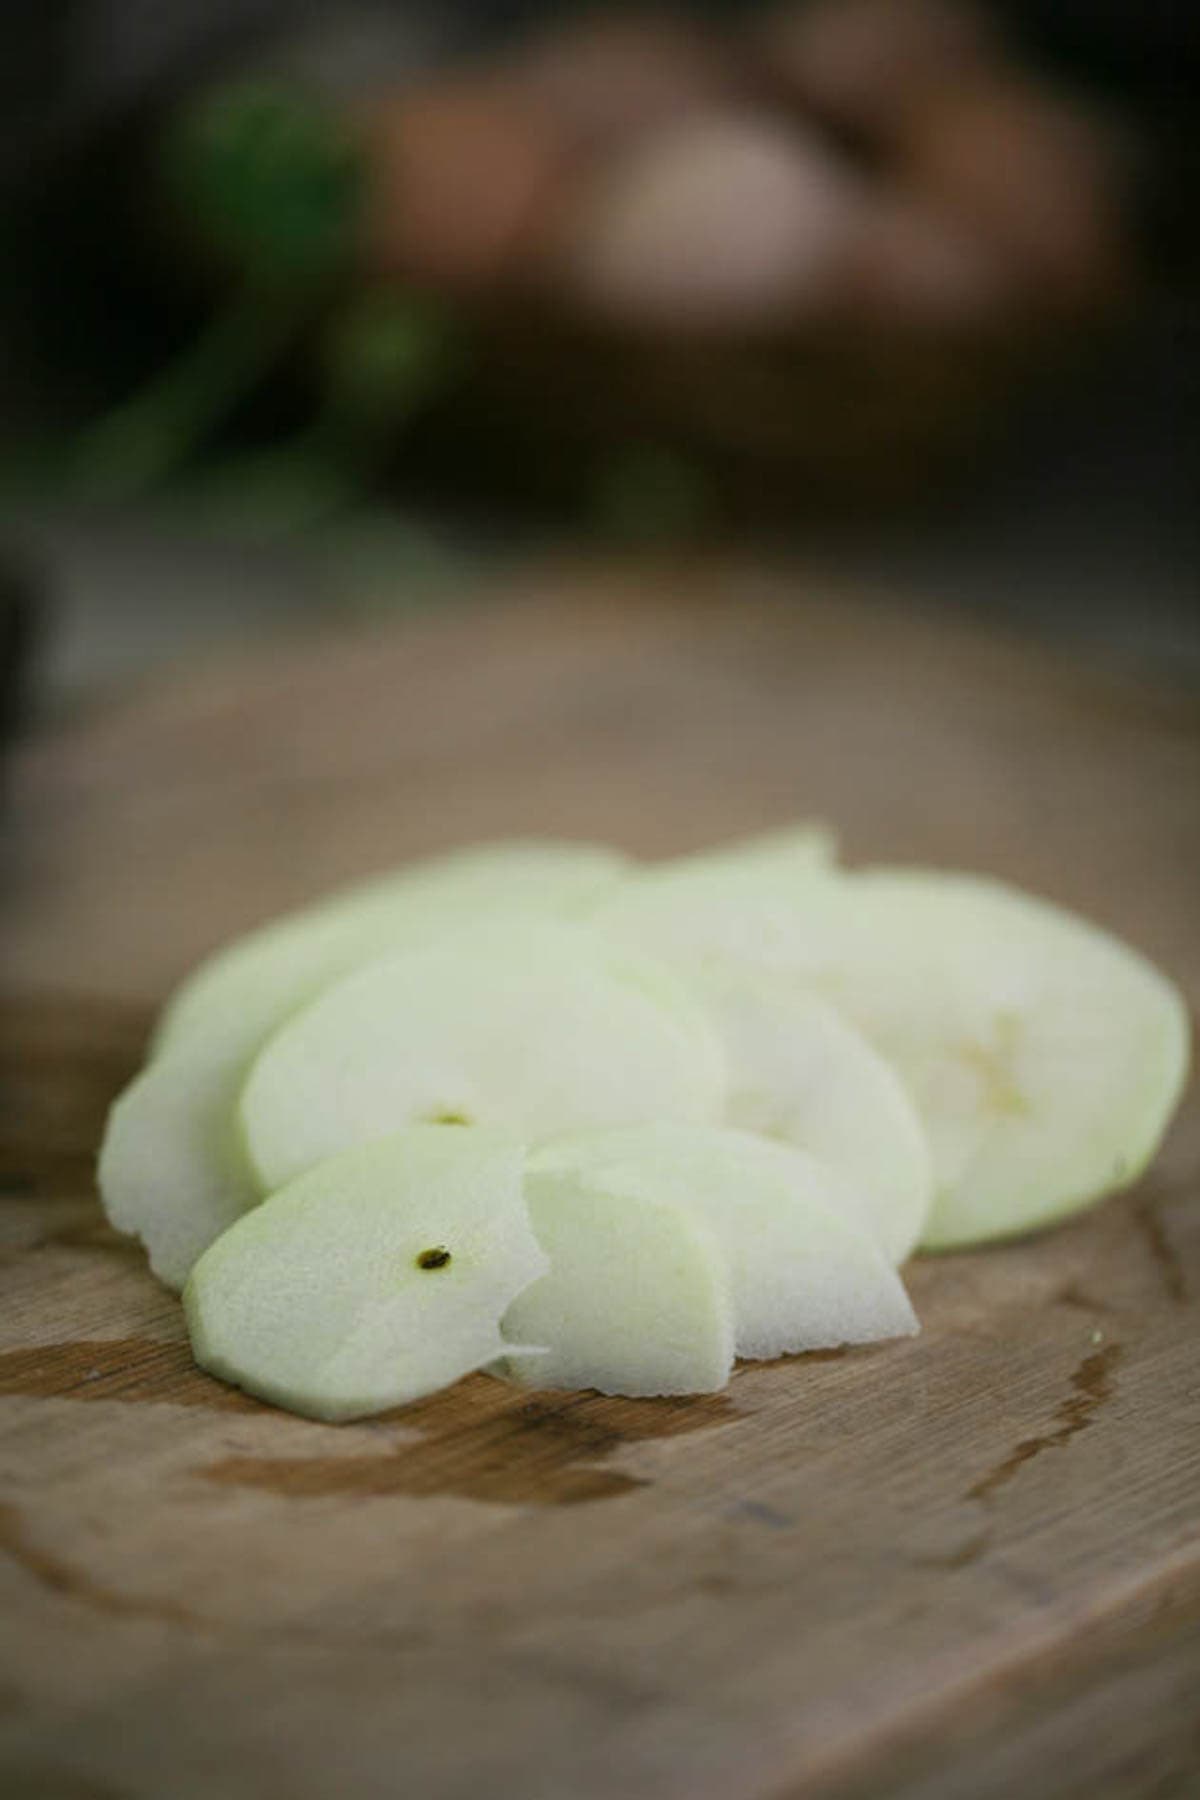 Apples sliced and peeled. 